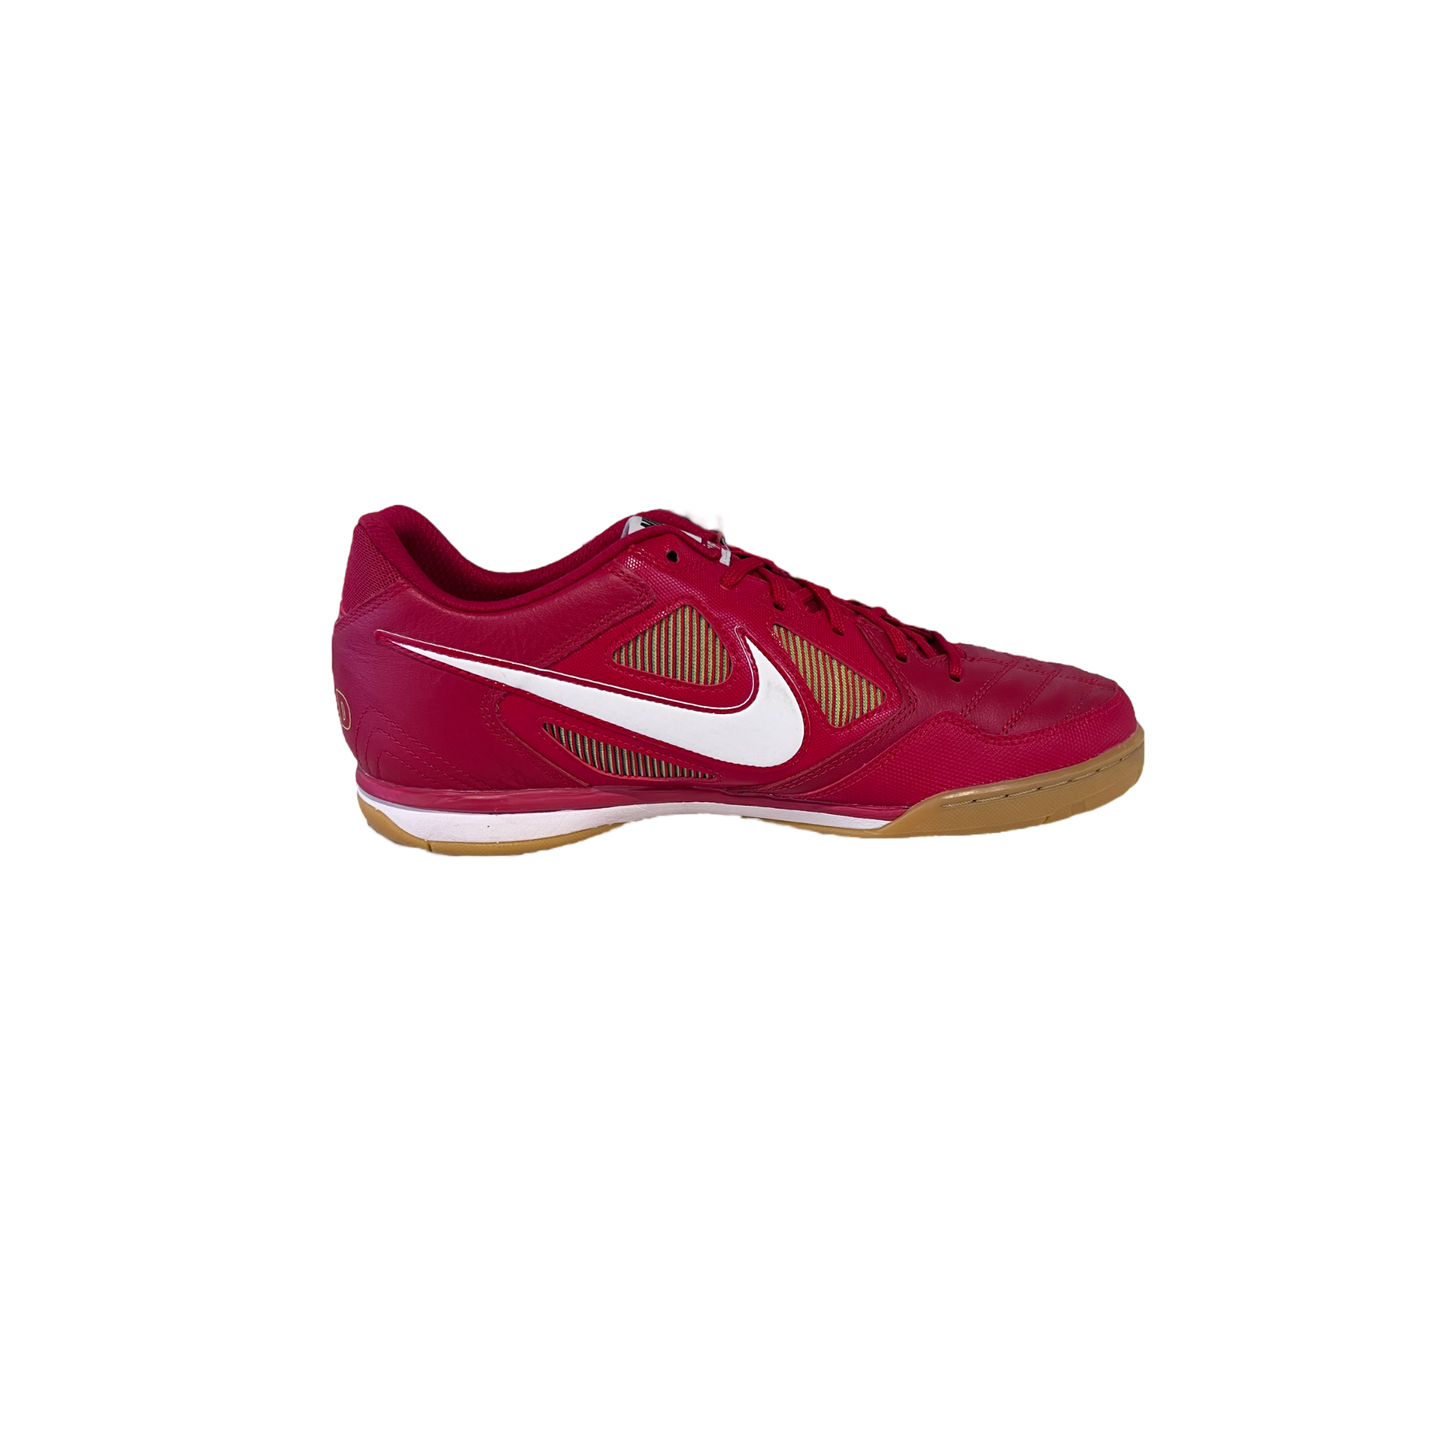 Nike SB Gato Supreme Red